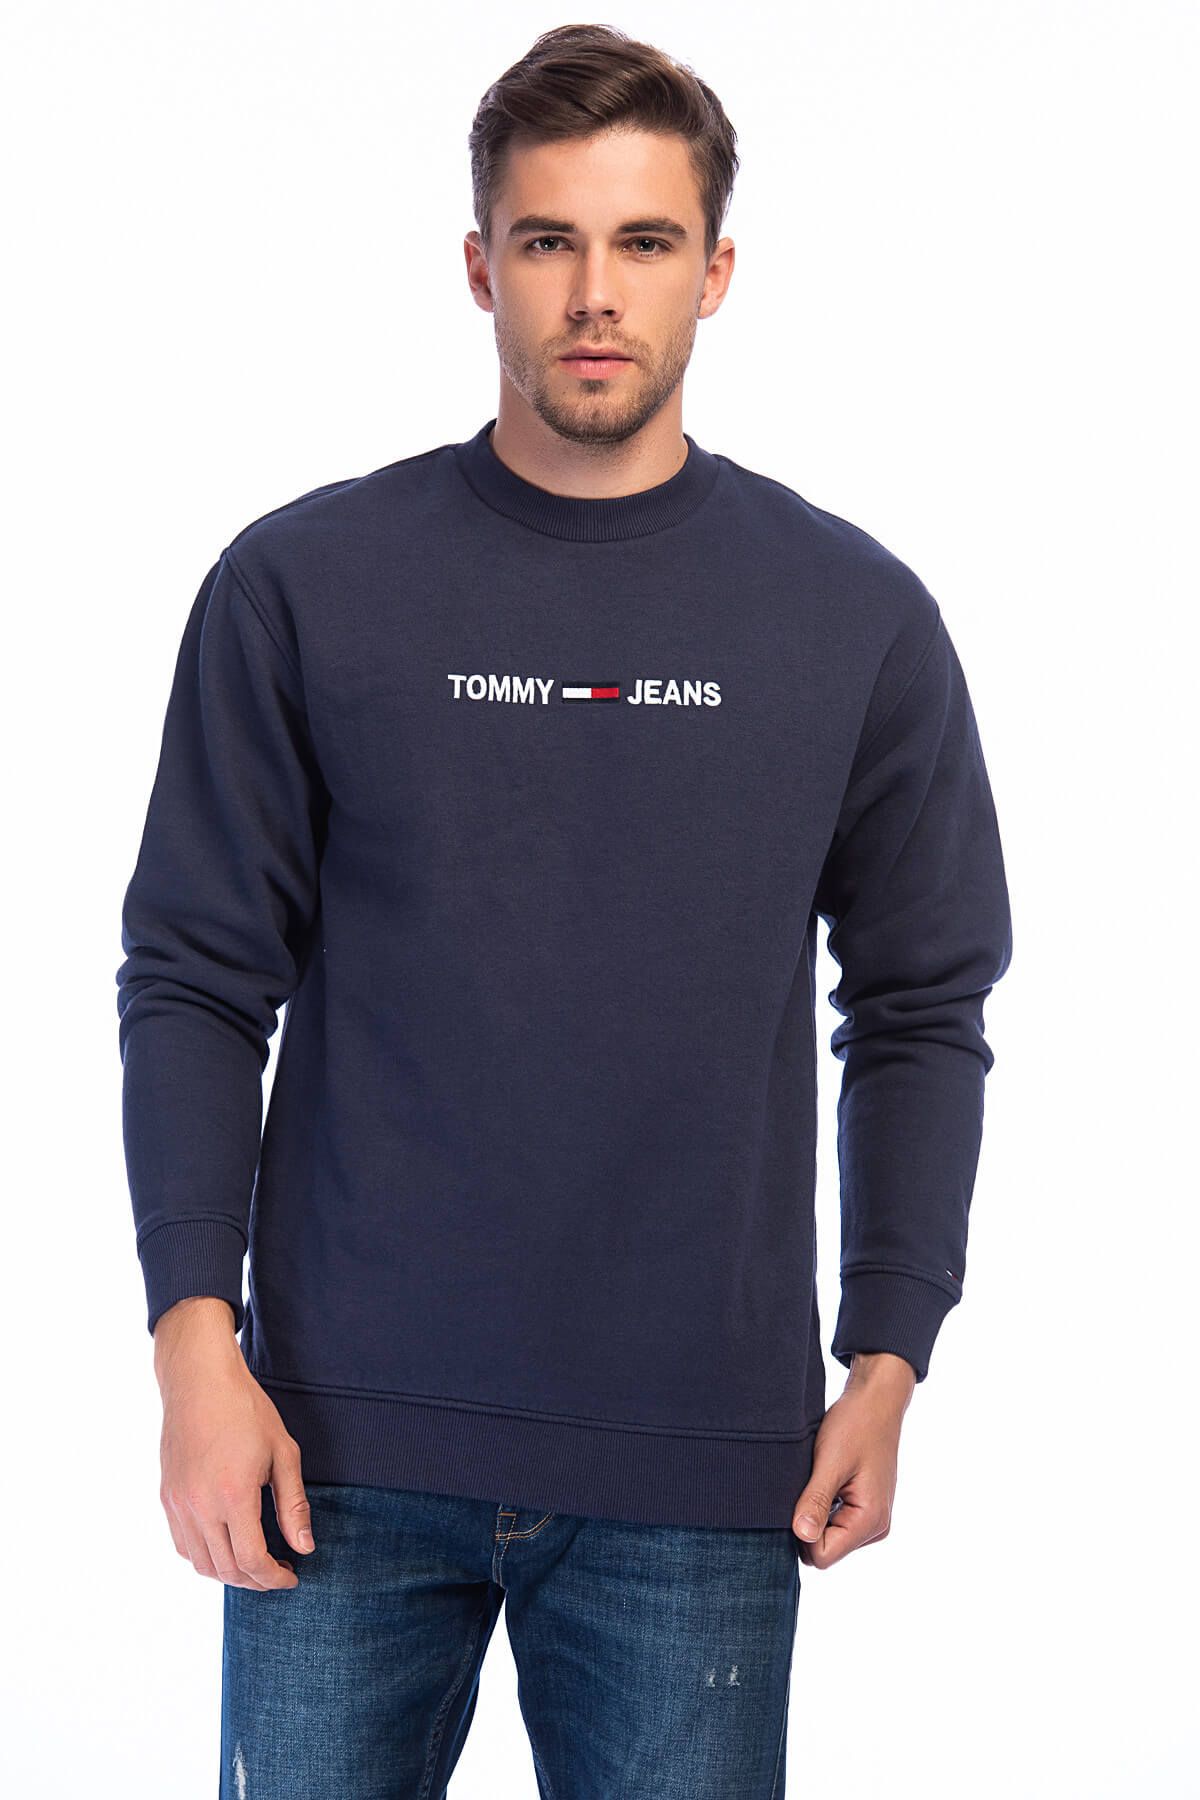 Tommy Hilfiger Erkek Small Logo Sweatshirt DM0DM05147